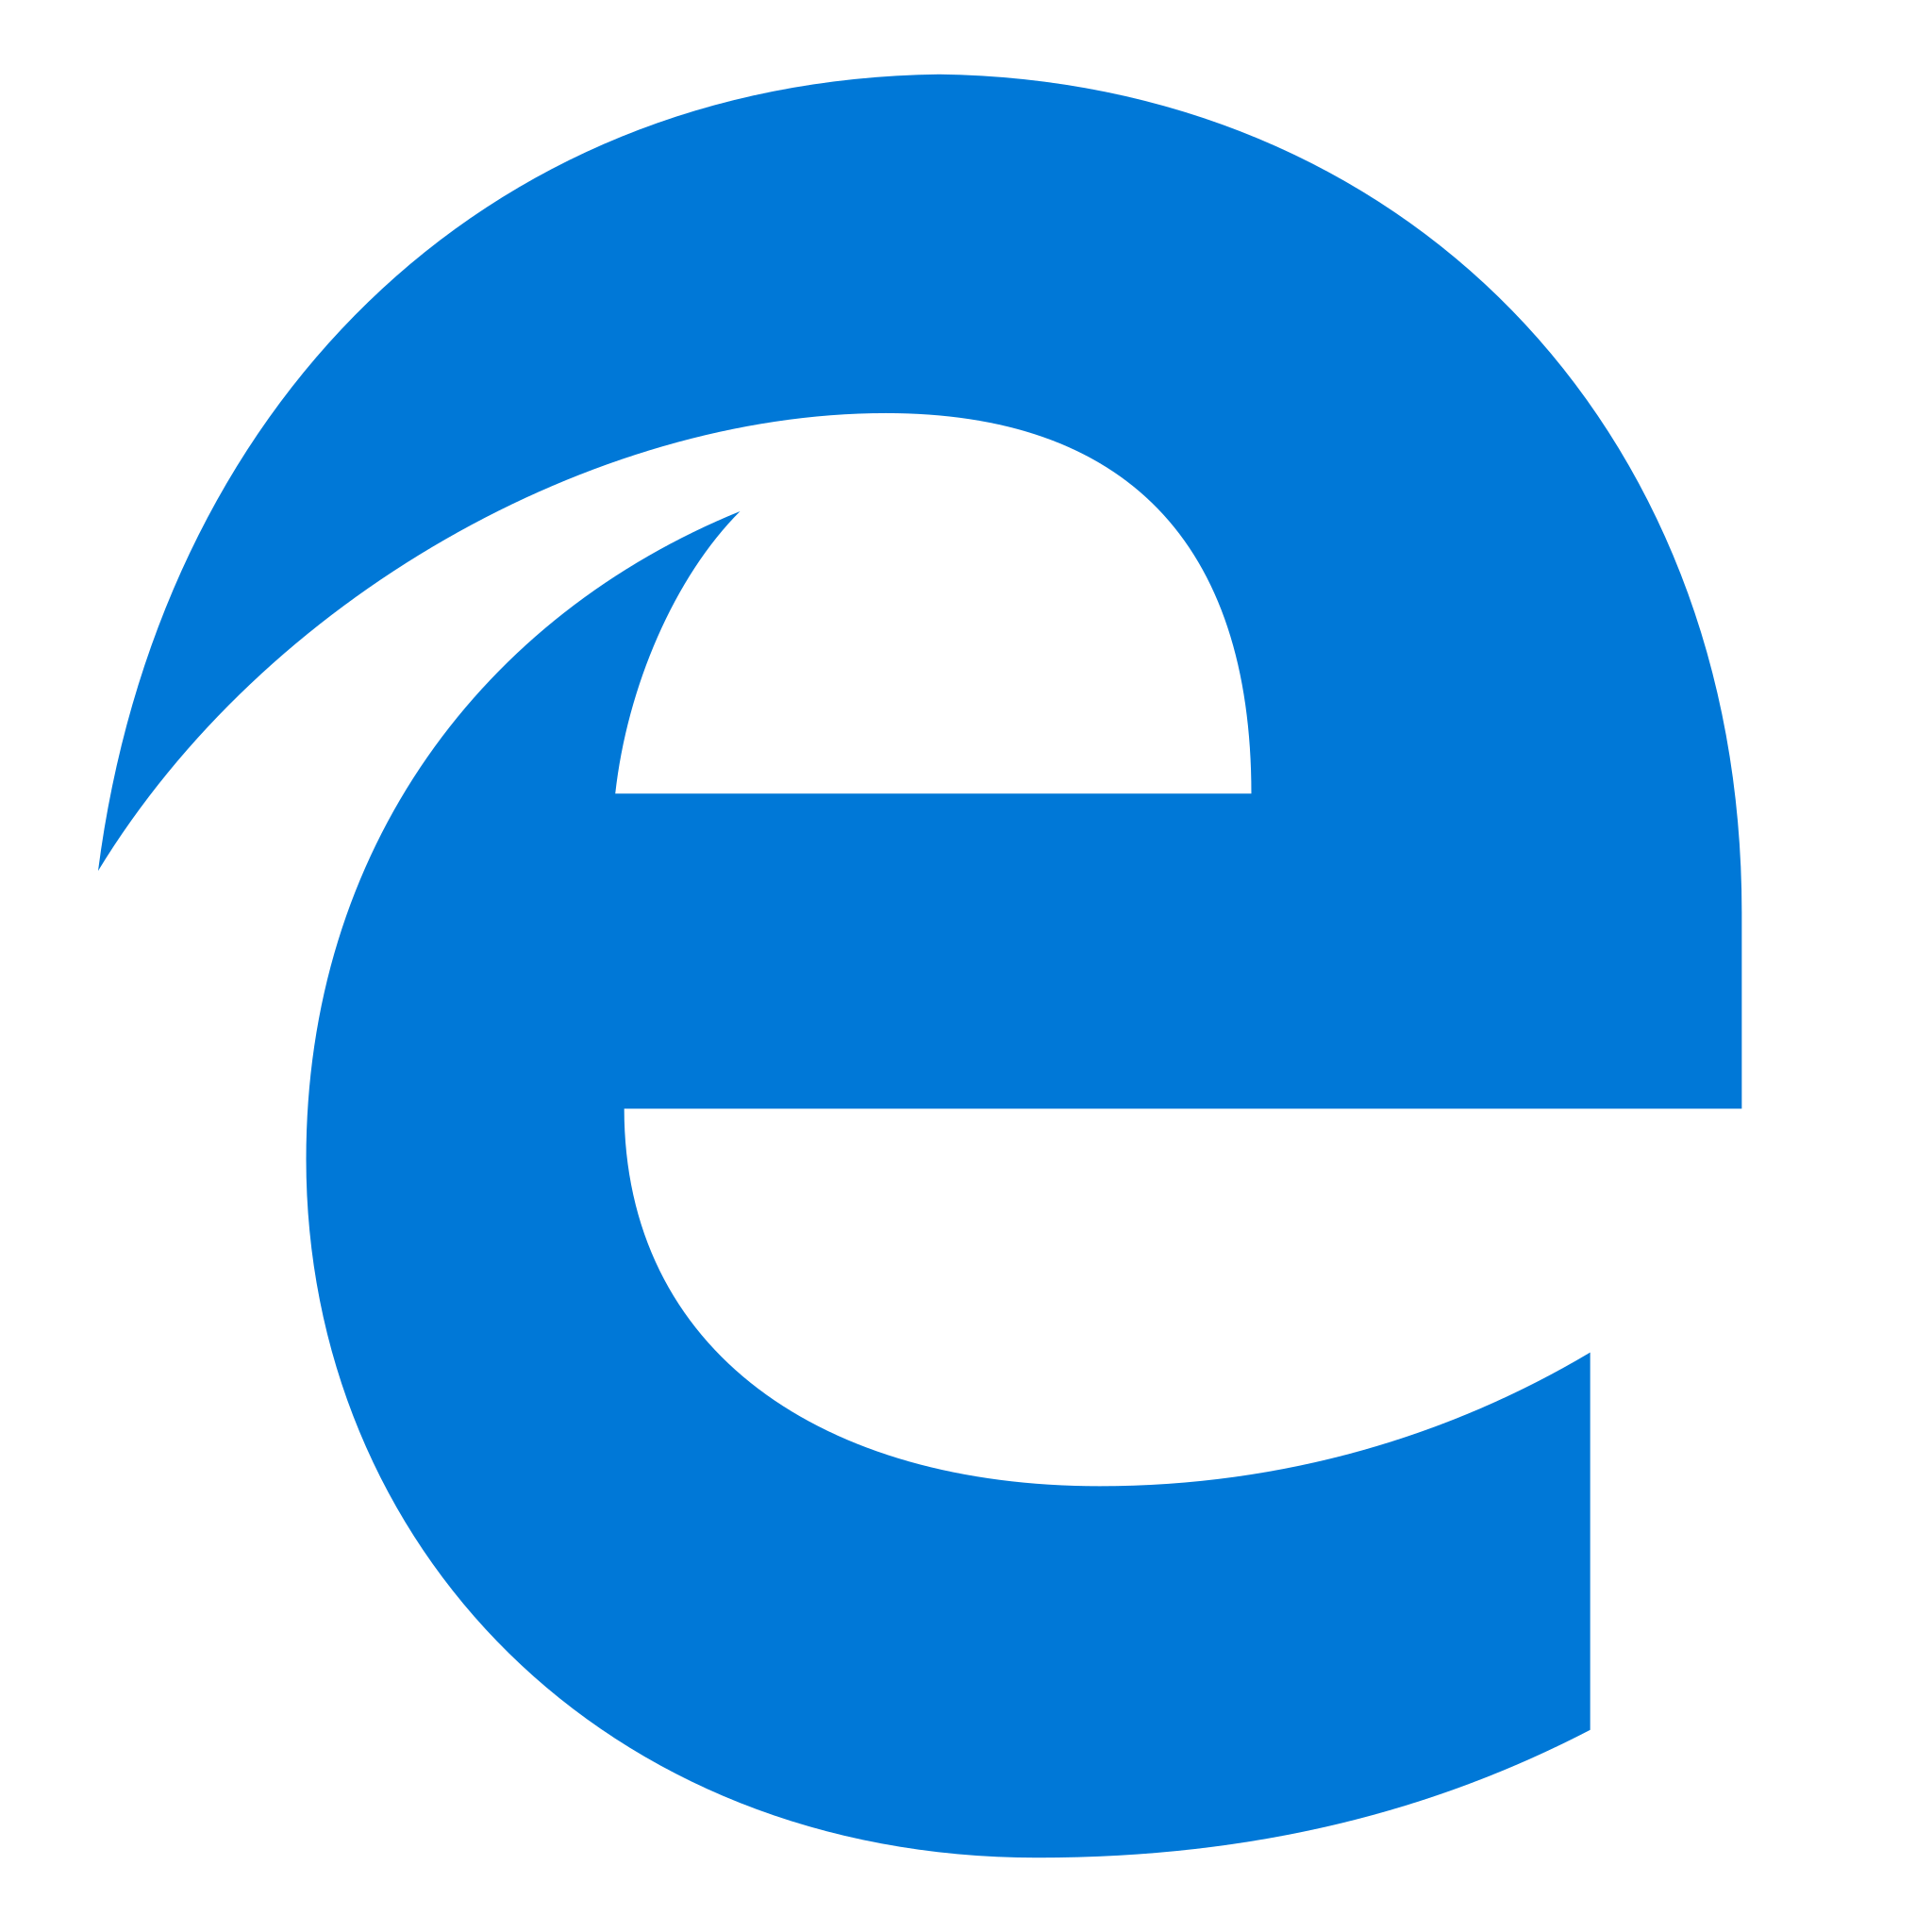 IE / Edge